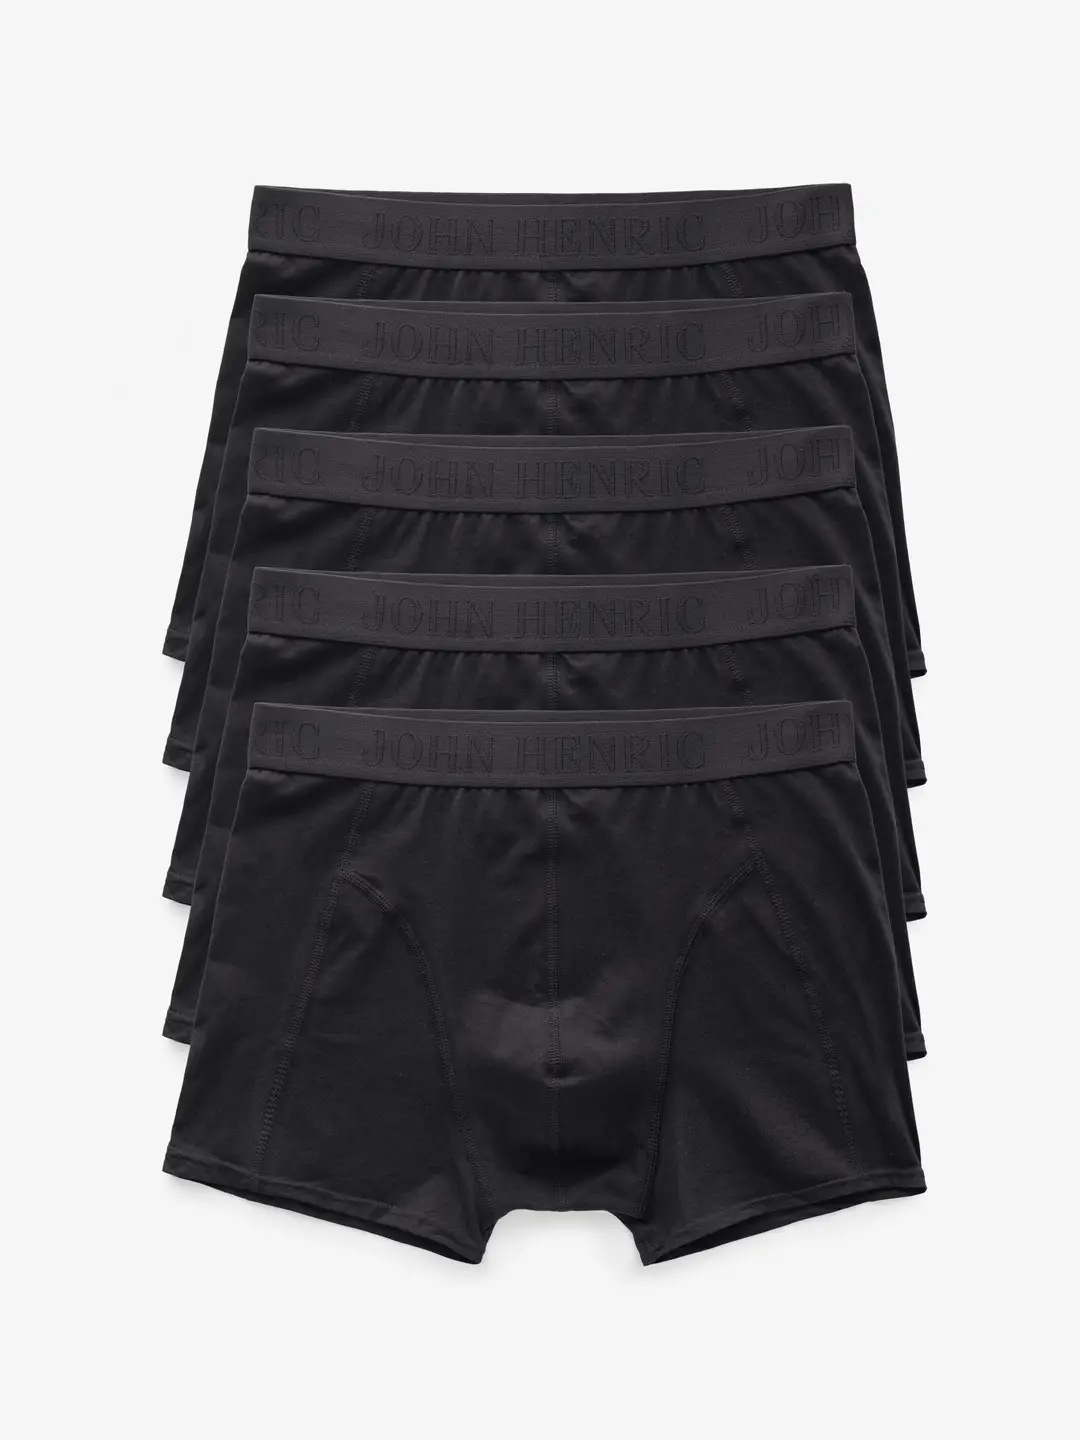 1pc Men's Colorblock Boxer Briefs Underwear, High-quality & Affordable